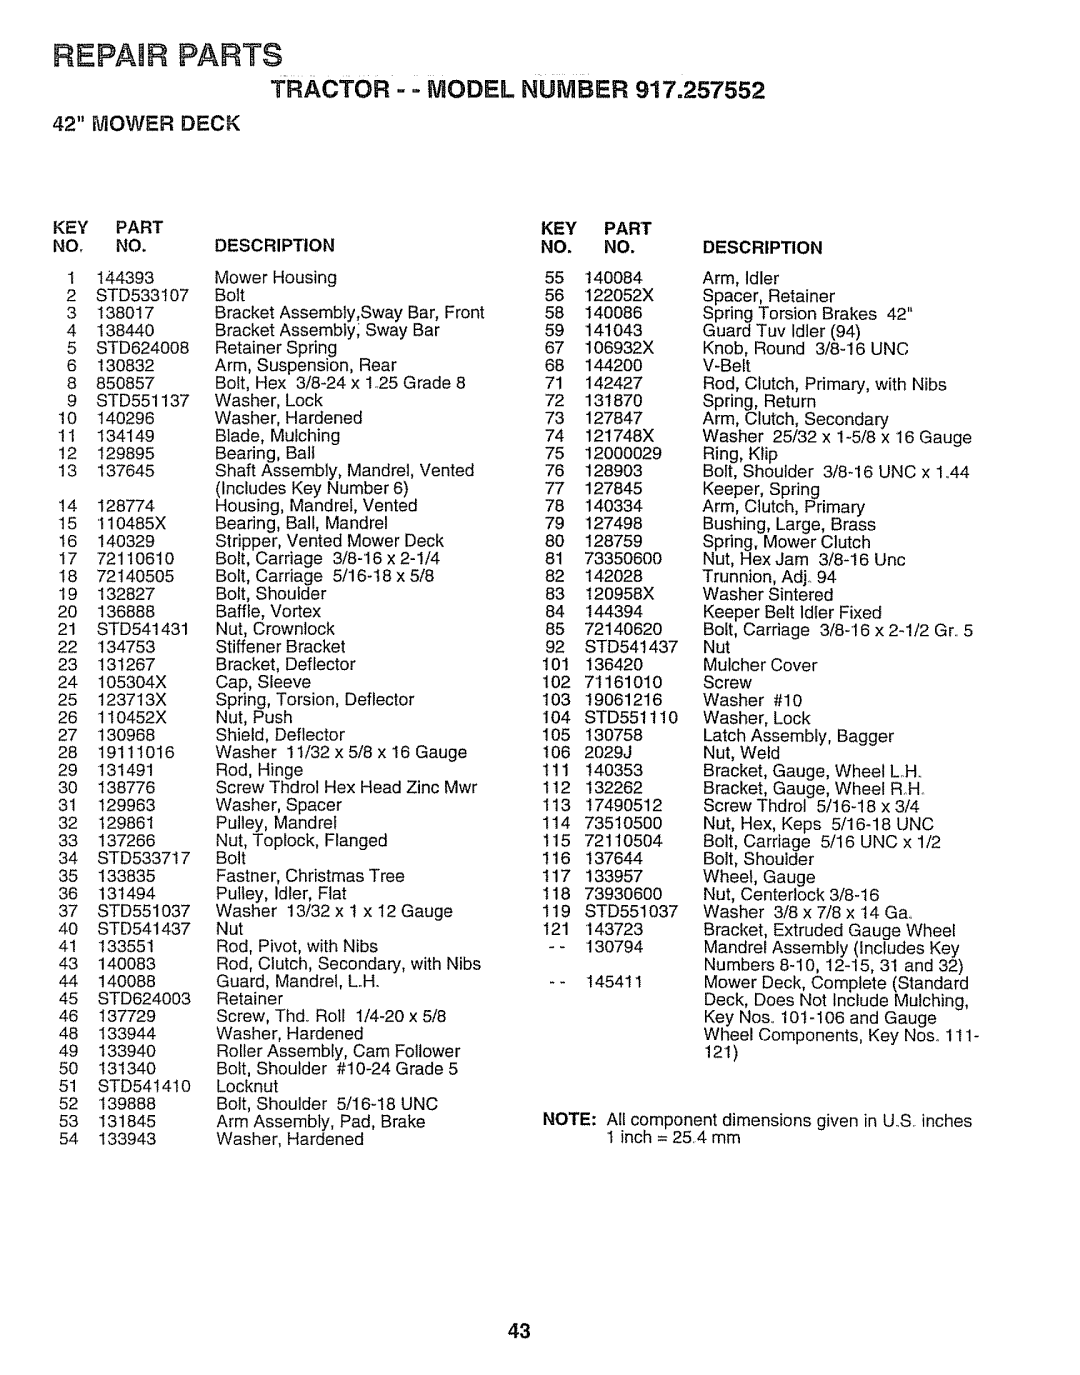 Sears 917.257552 manual REPAnR PARTS, Tractor= = Model Number, Mower Deck, Description, Part 